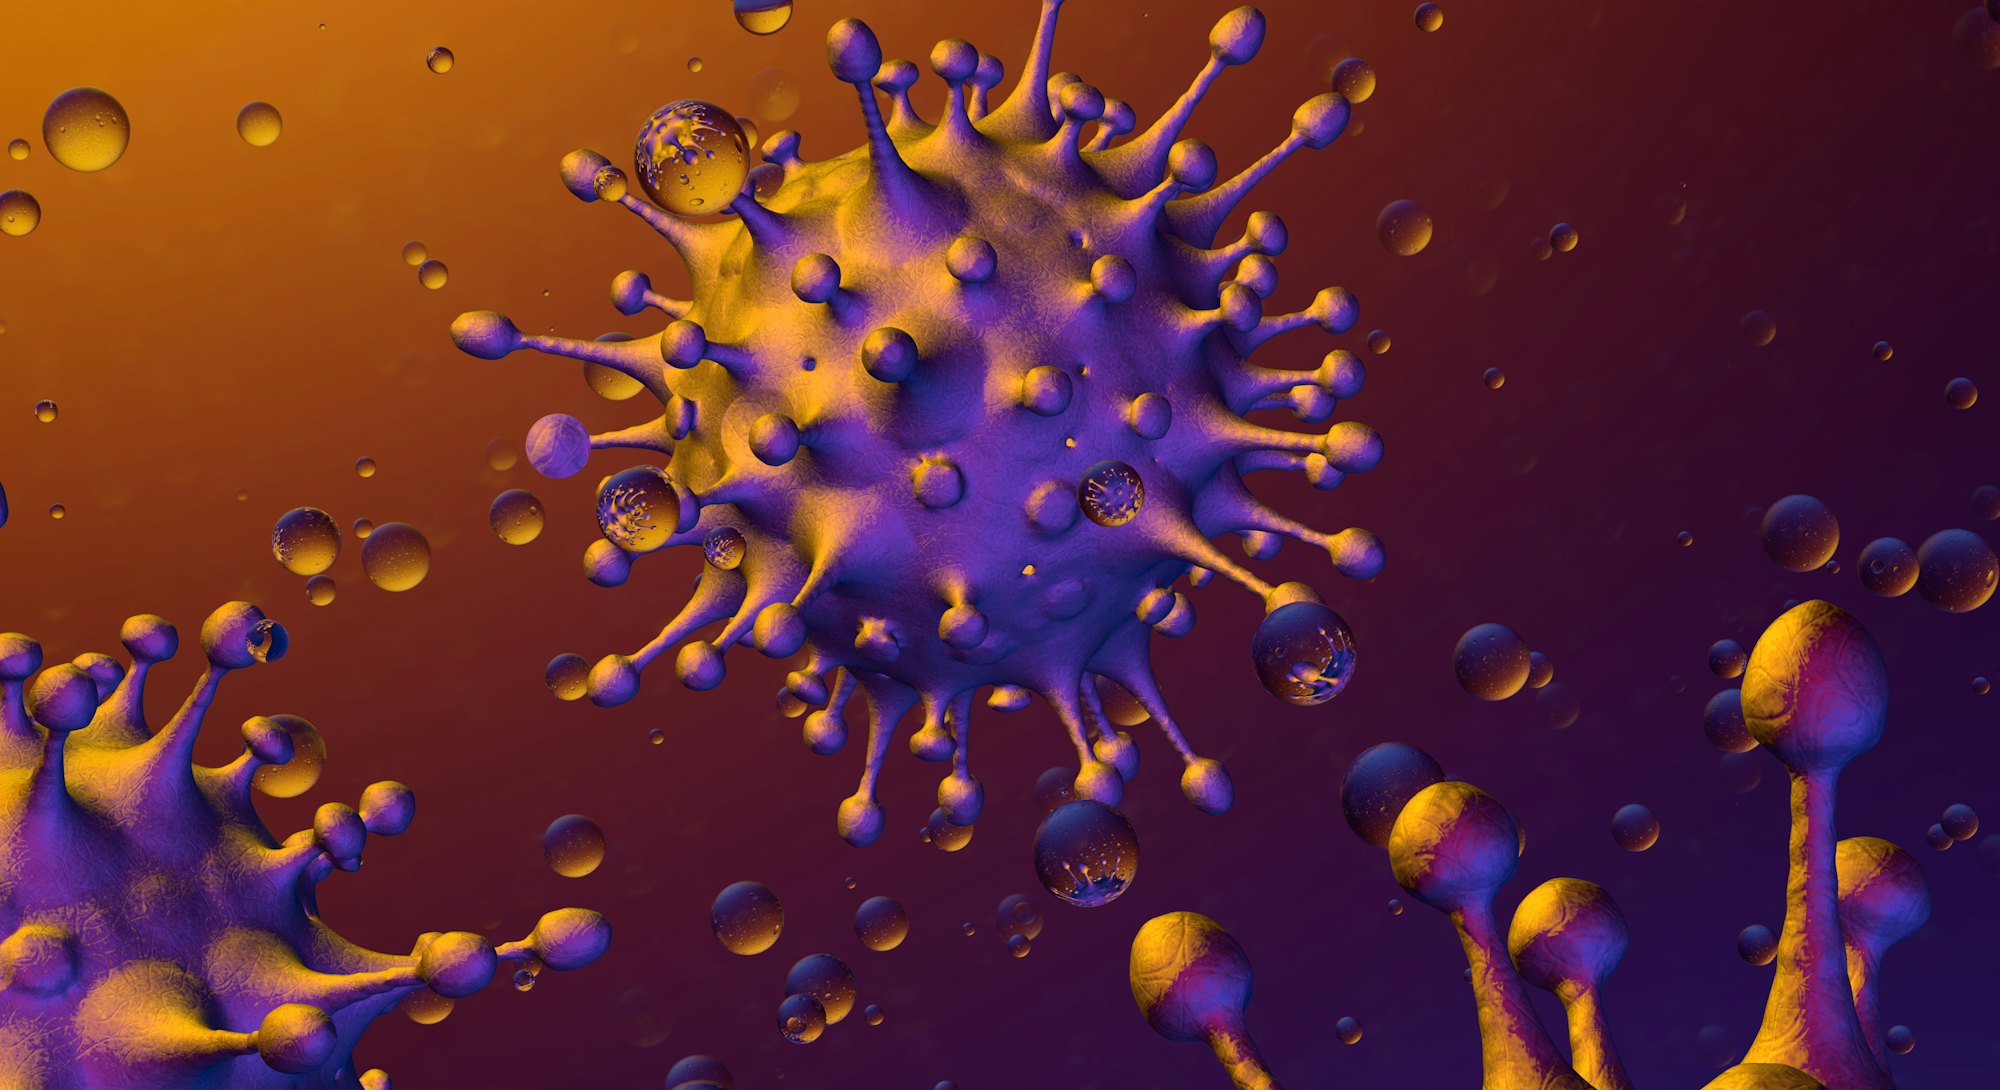 Microscopic view of infectious SARS-CoV-2 virus cells. Coronavirus disease COVID-19 outbreak. 3D ren...